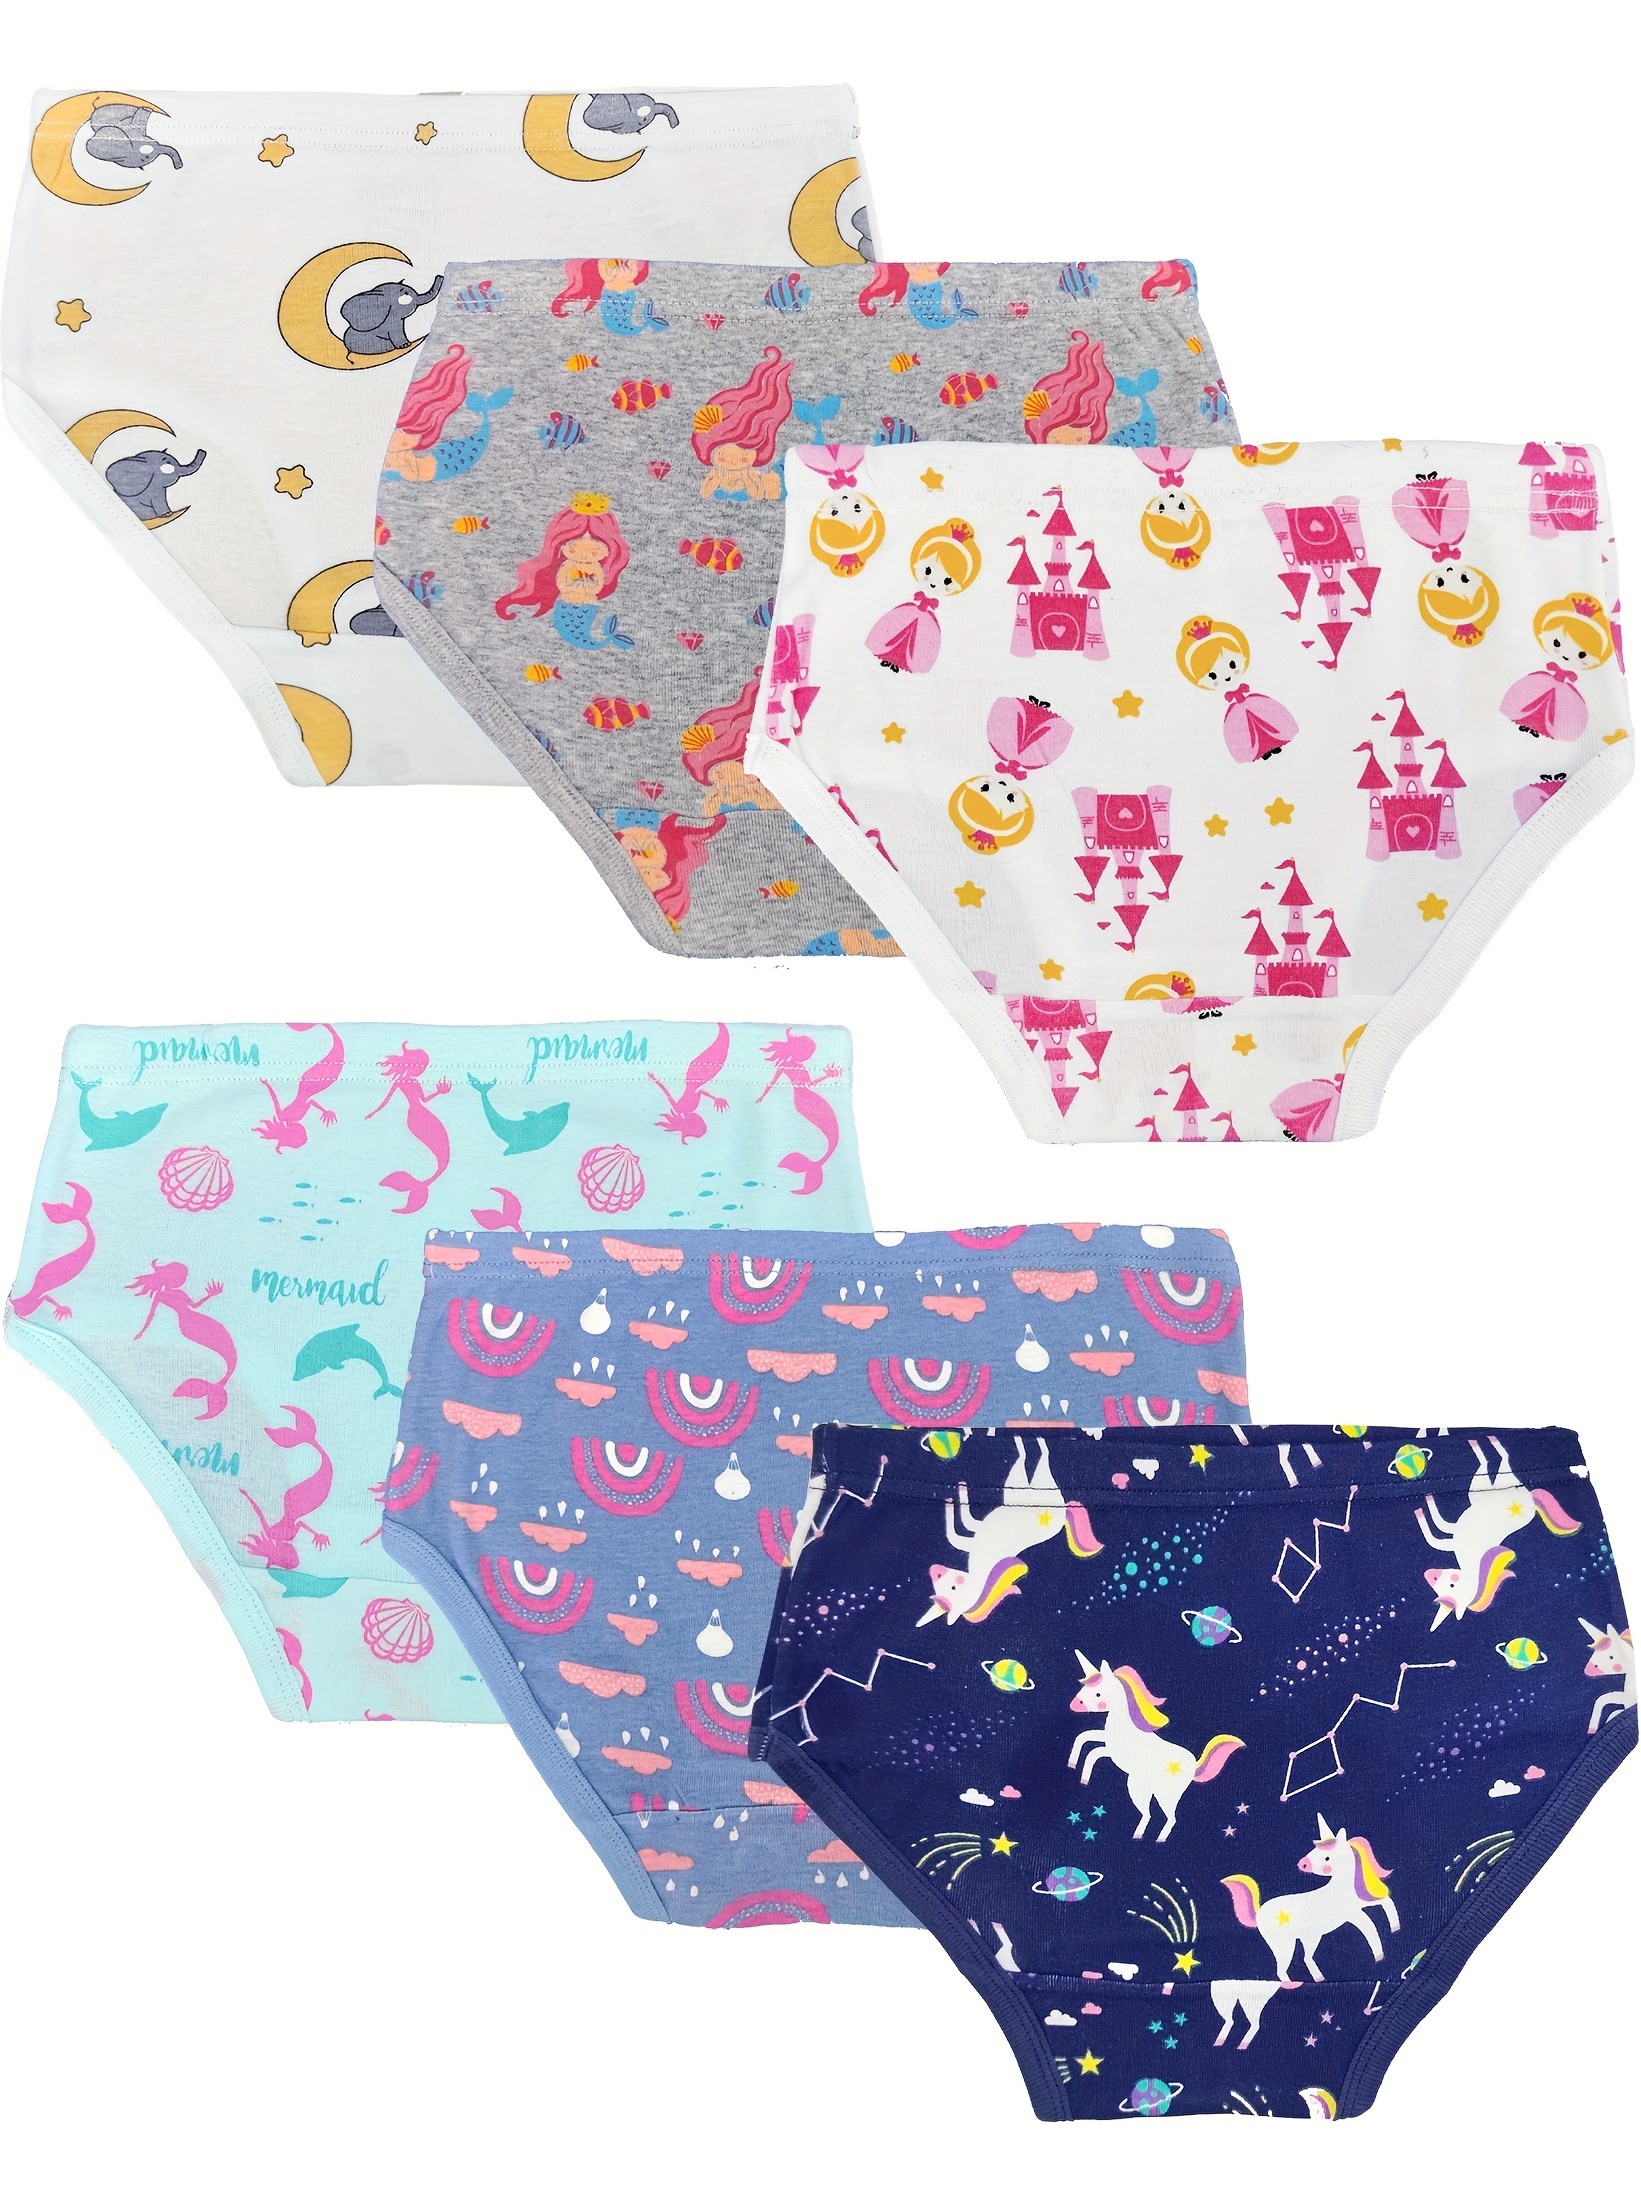  Toddler Girls Underwear Unicorn Mermaid Panties